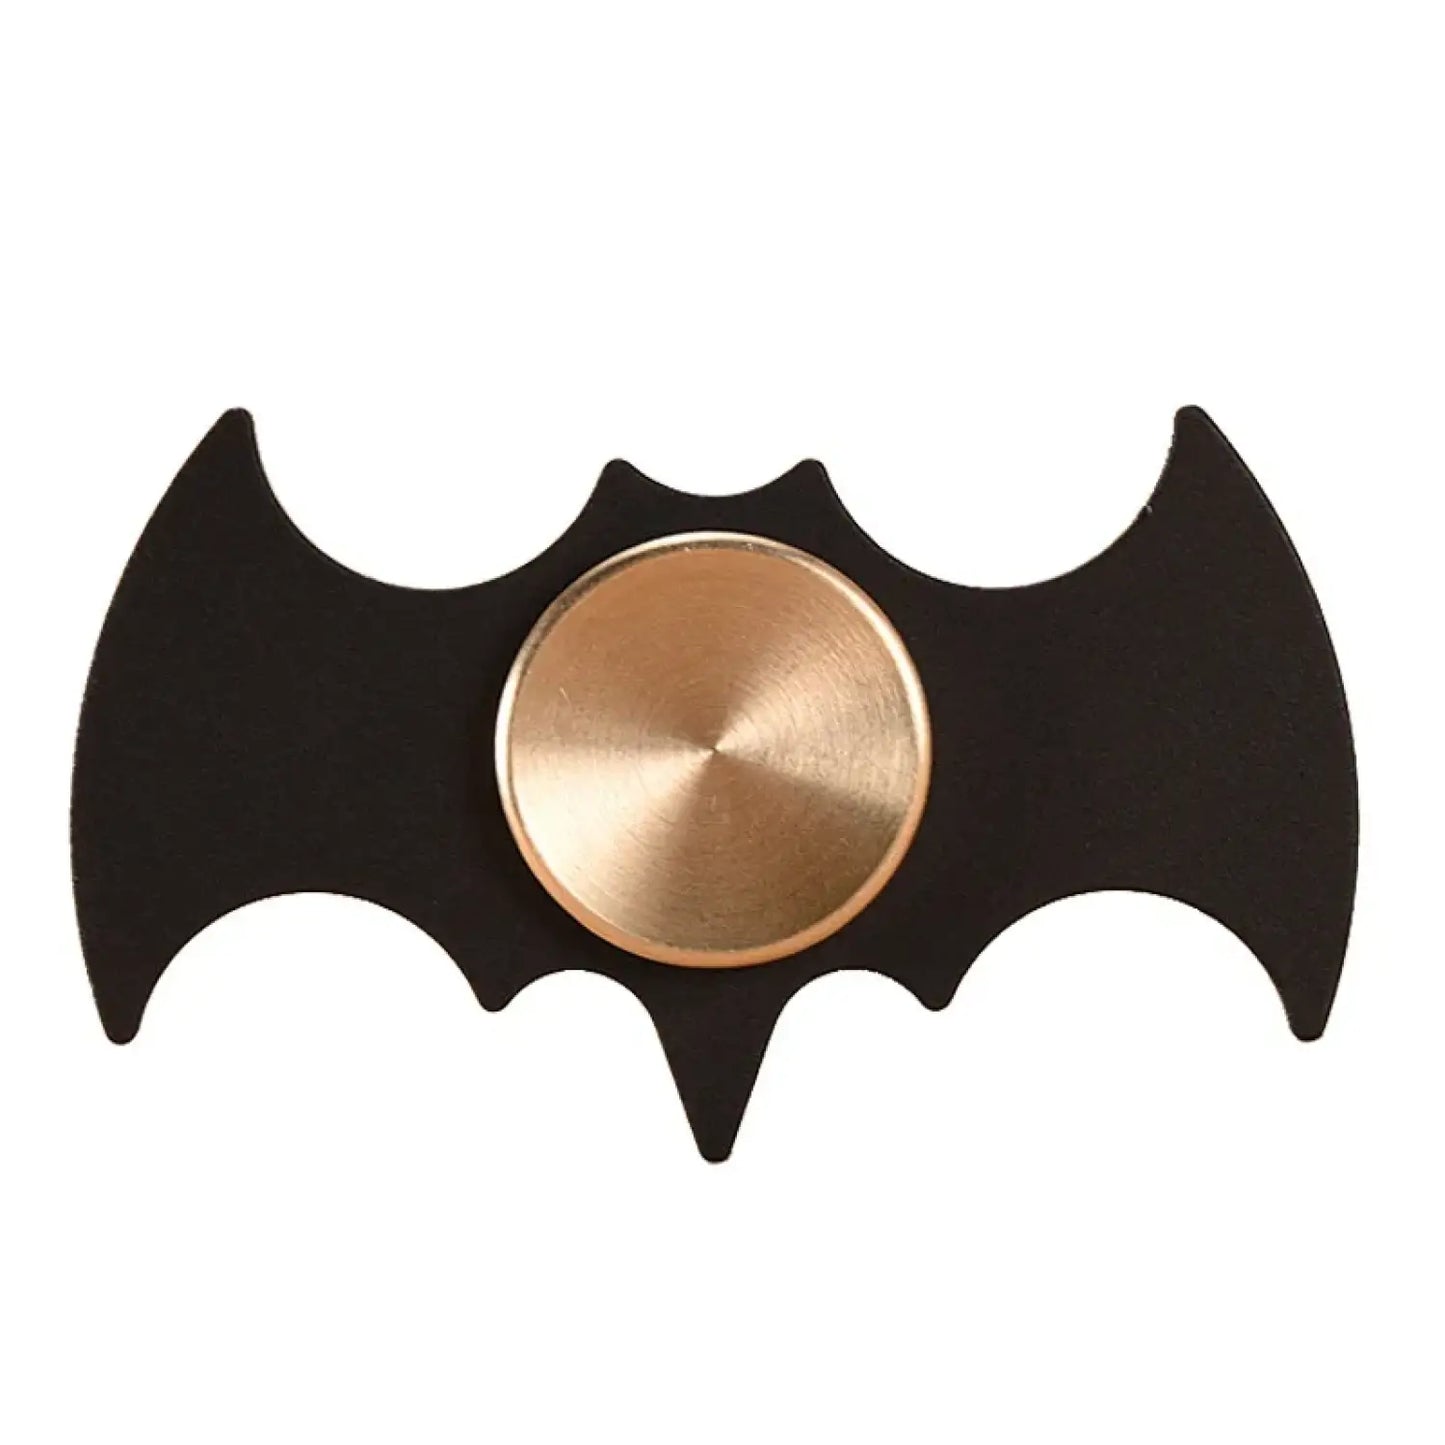 Hand Fidget Spinner Alloy Bats OX Metal EDC For Anti Stress